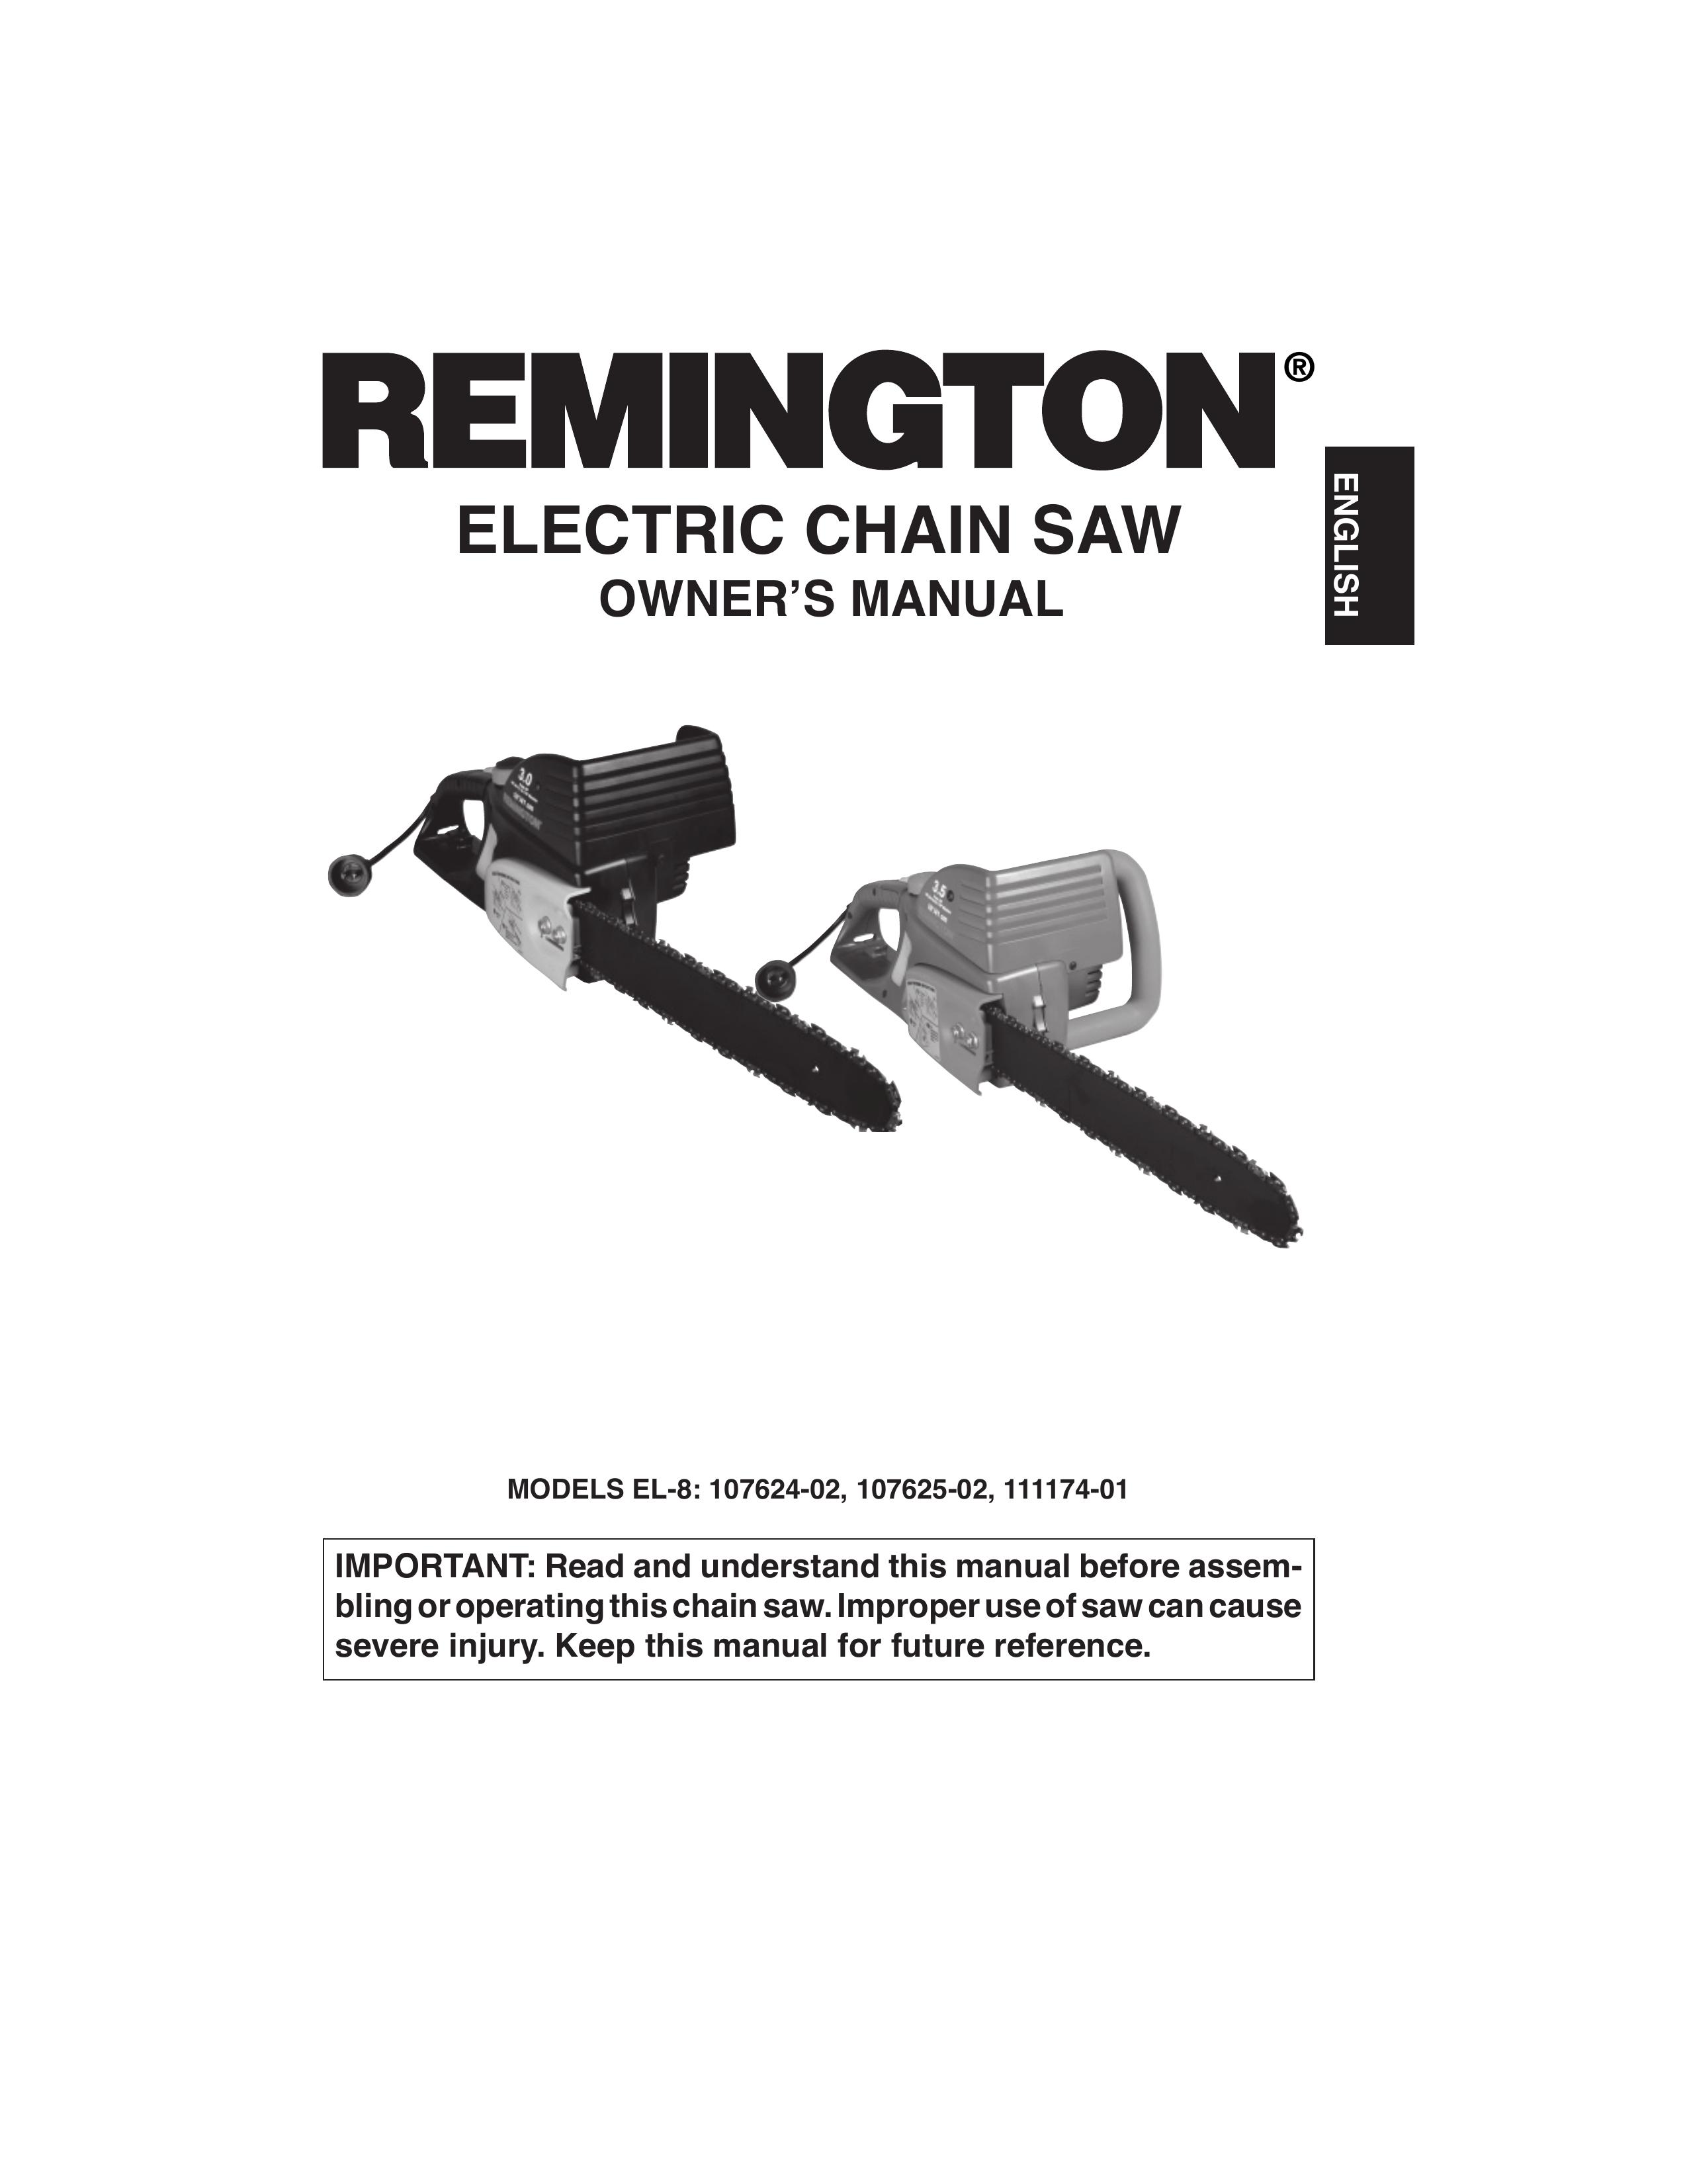 Remington Power Tools 111174-01 Chainsaw User Manual